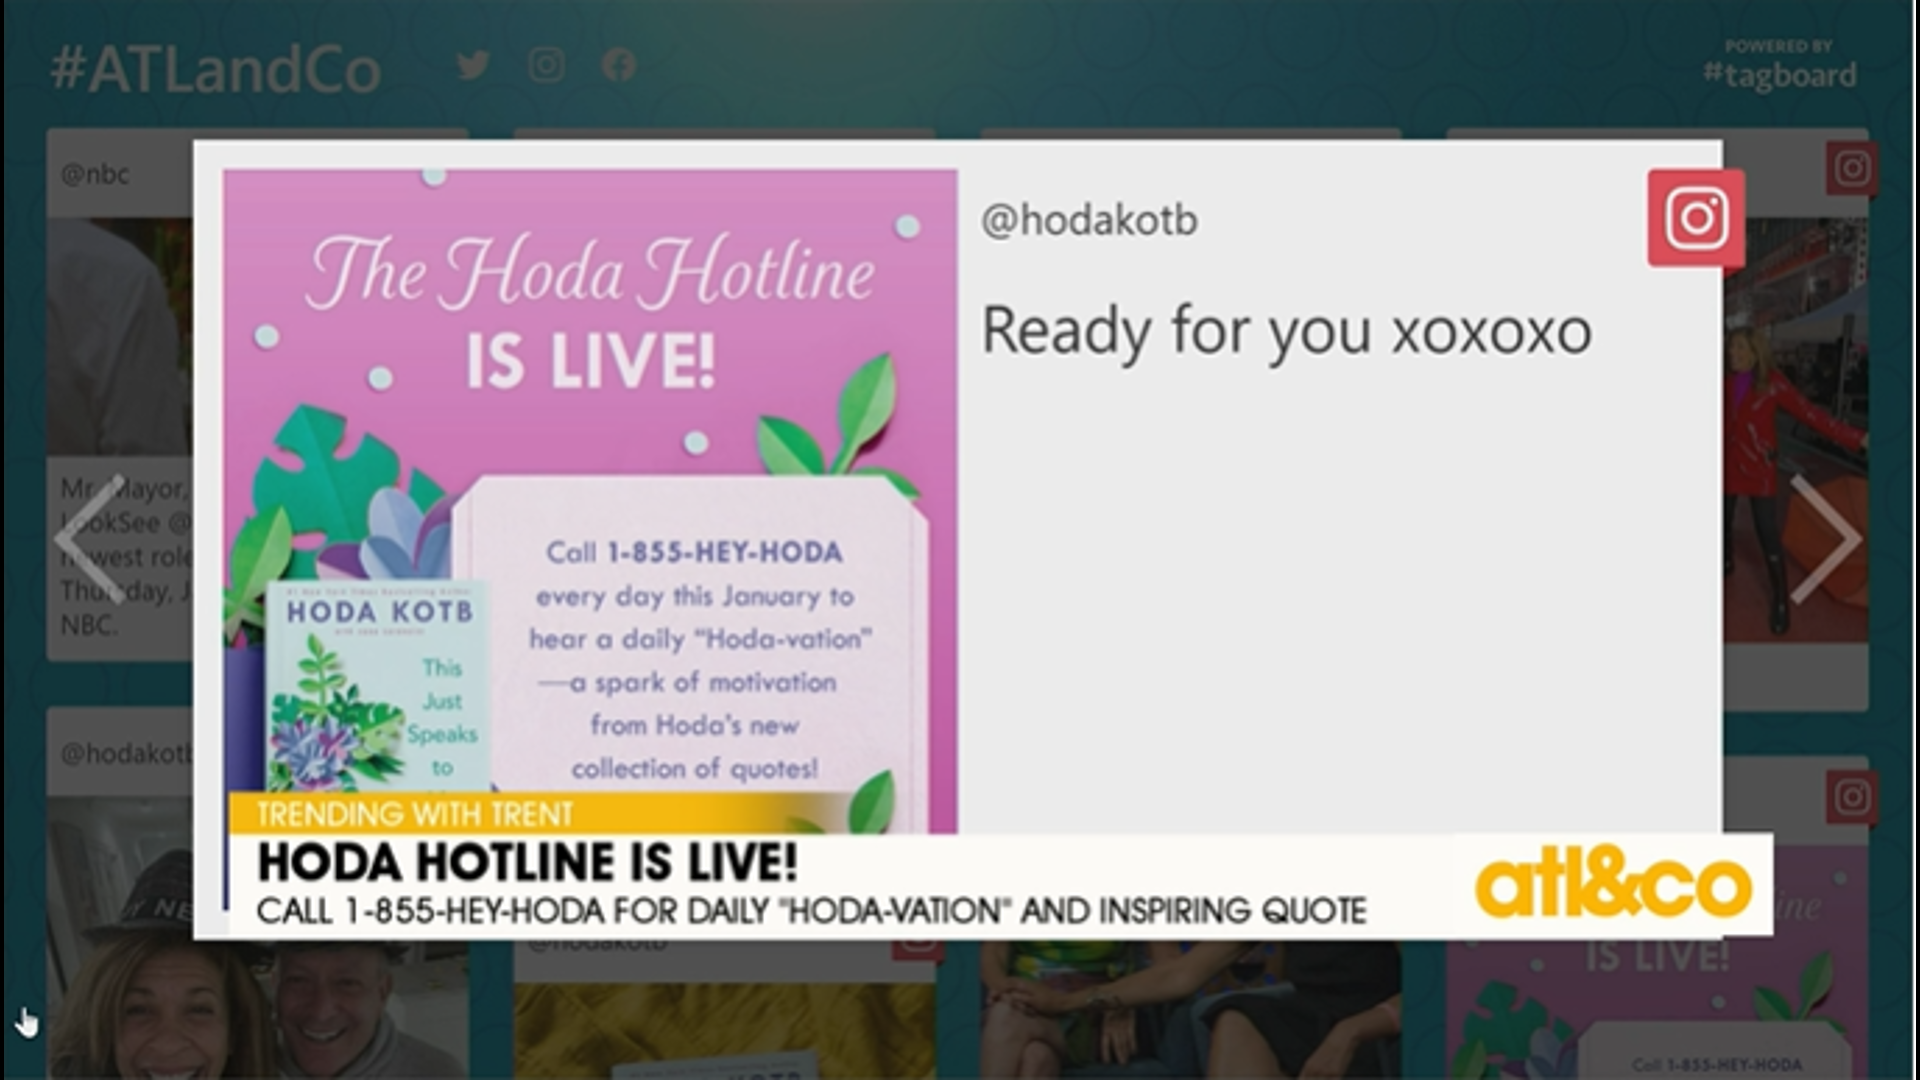 TODAY Show co-anchor Hoda Kotb shares daily motivation and inspiring quotes at 1-855-HEY-HODA to kick off the New Year.